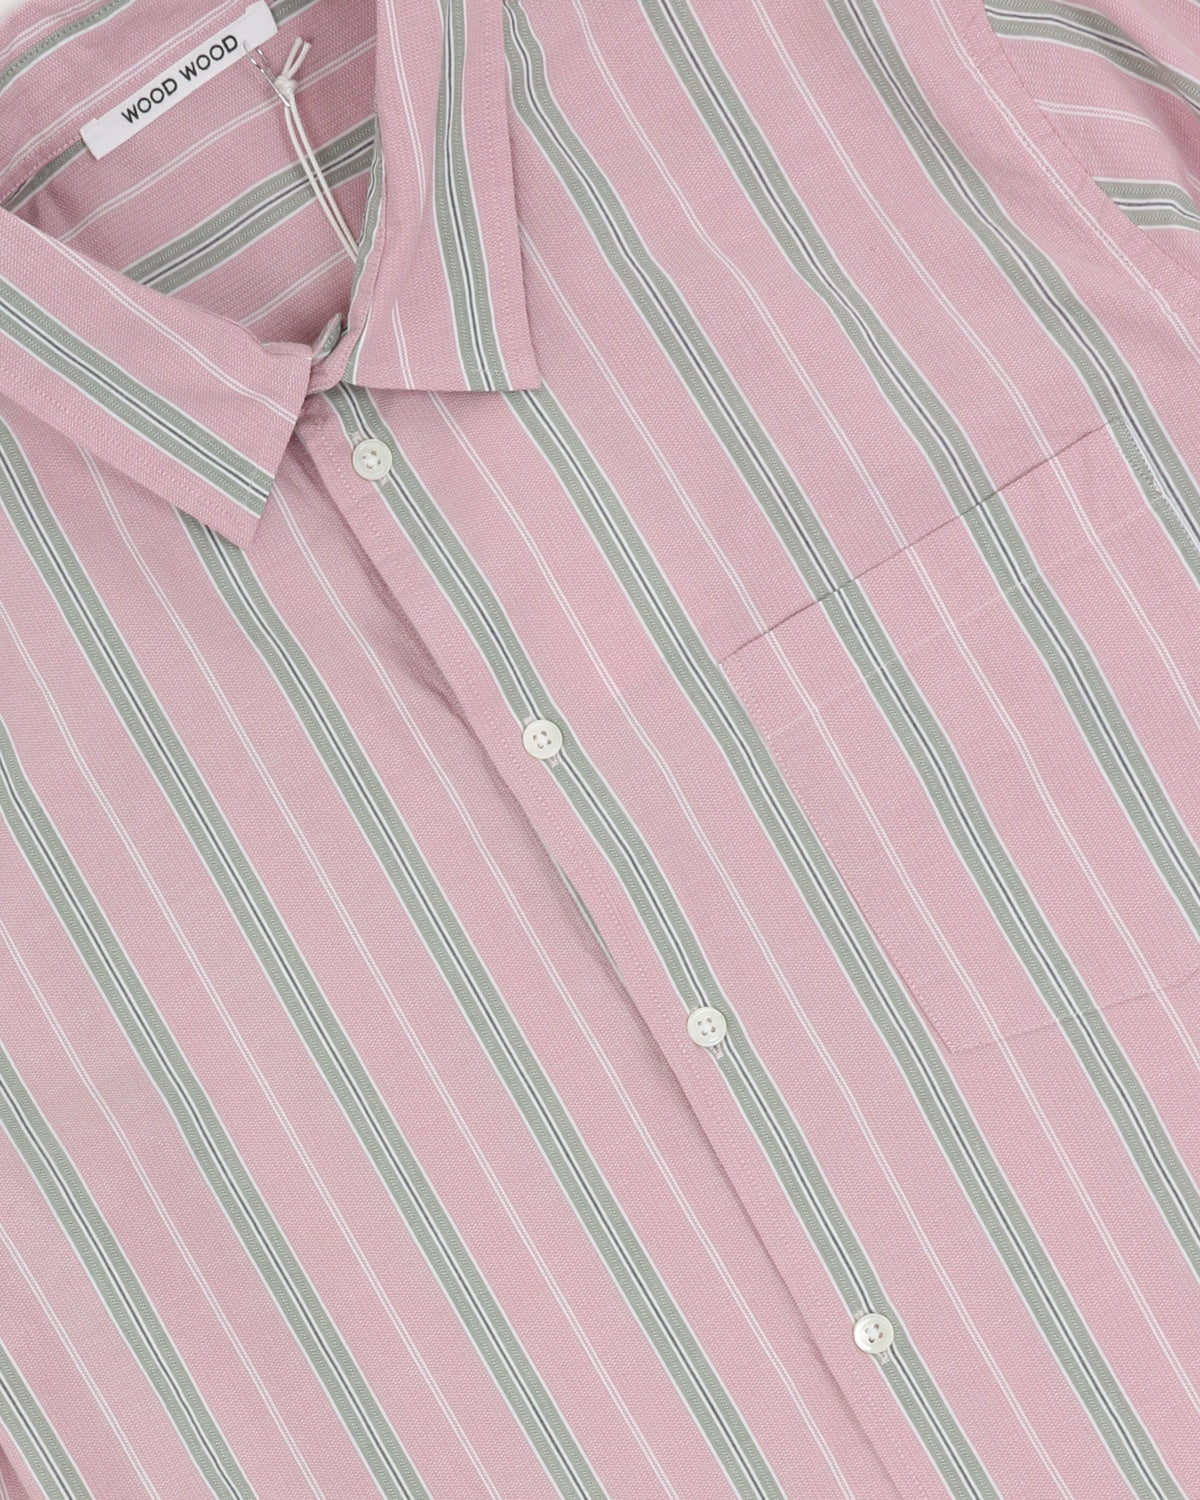 wood wood_timothy poplin stripe shirt_dusty pink_3_3